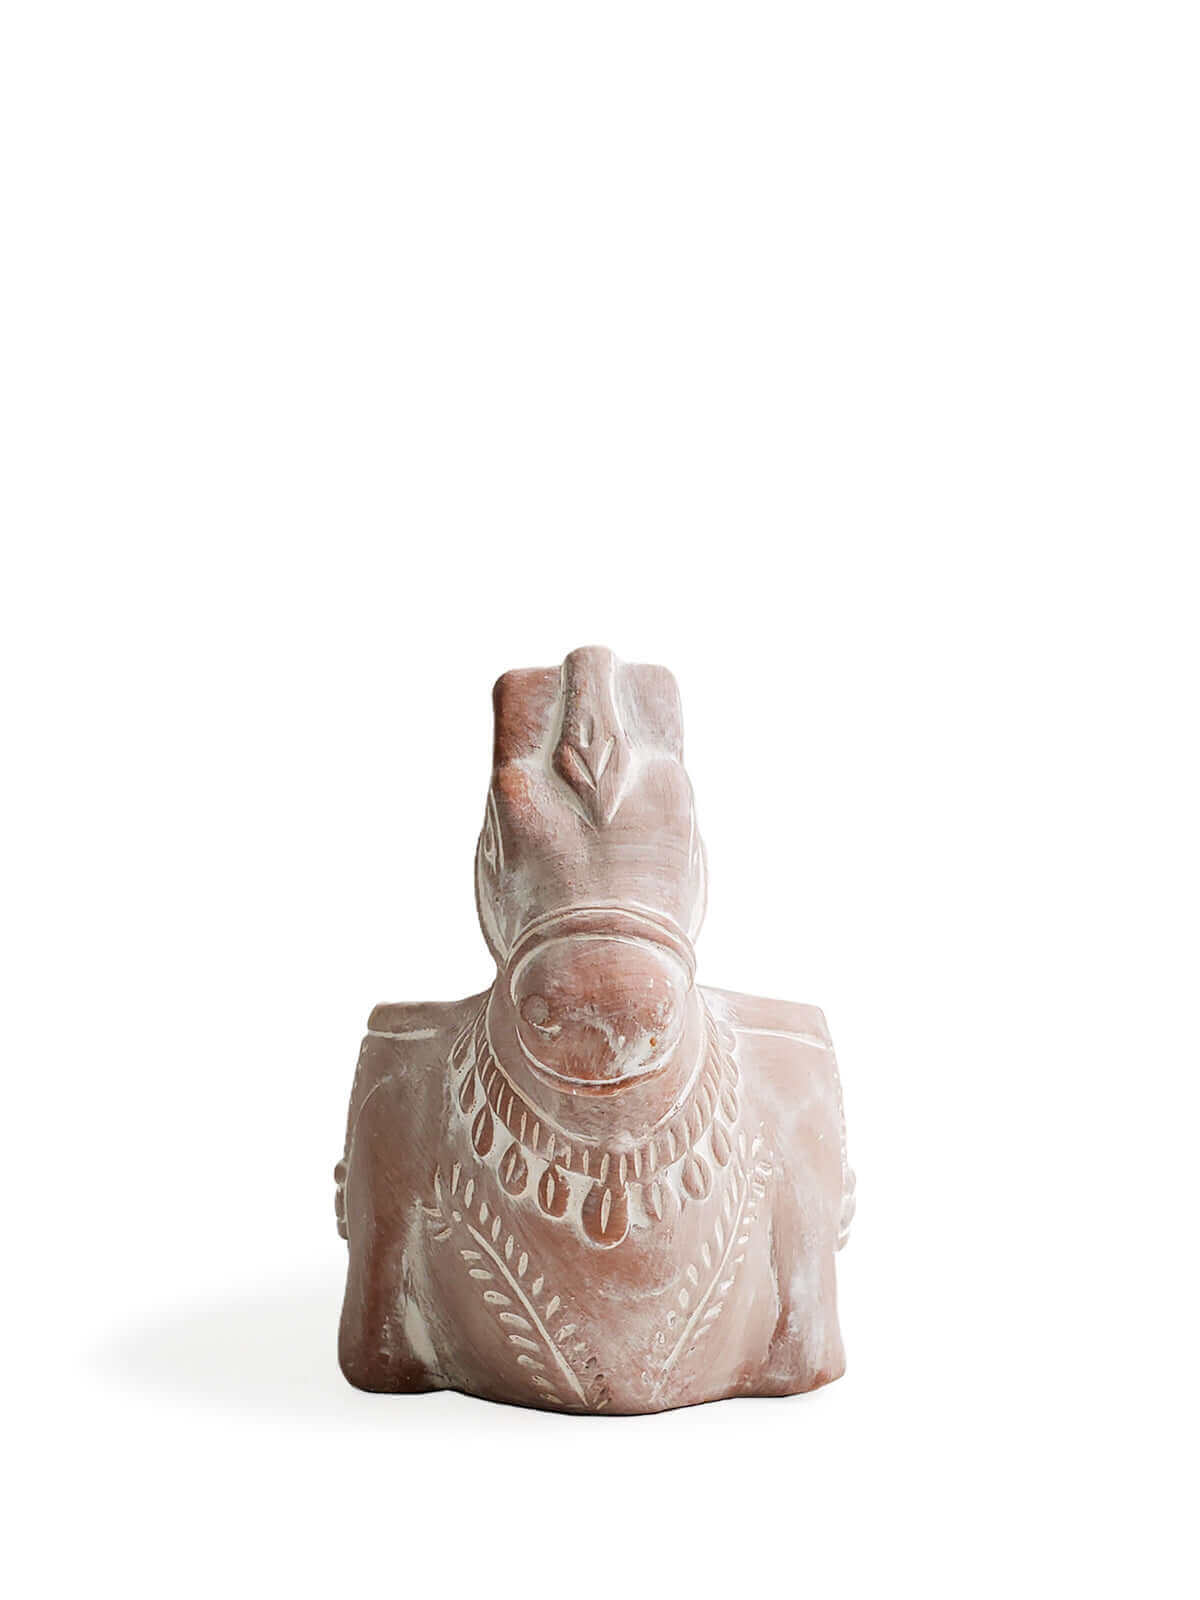 Terracotta Pot - Horse-6